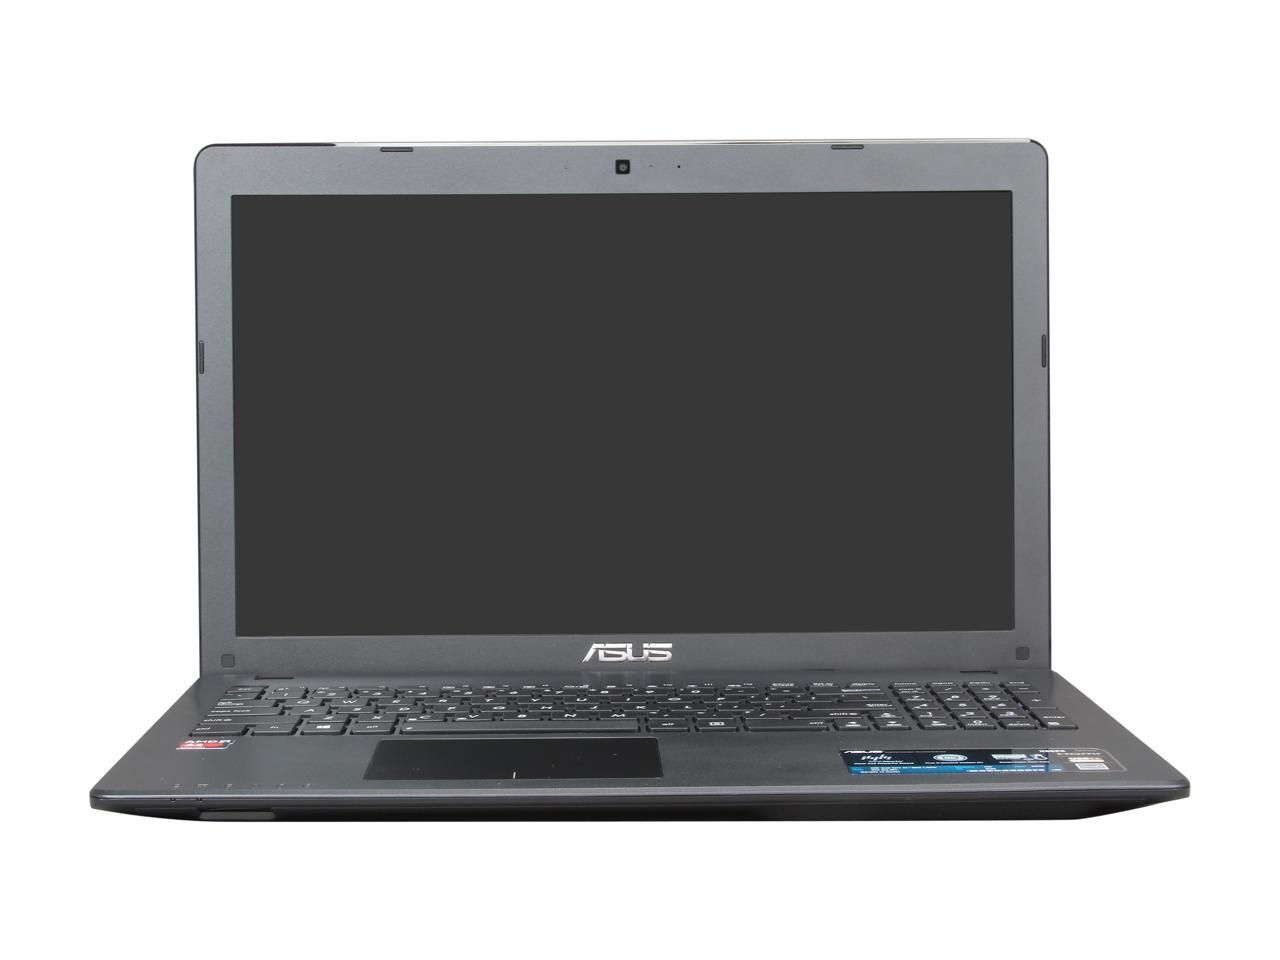 Asus Laptop X552ea Dh41 Amd A4 Series A4 5000 1 50 Ghz 4 Gb Memory 500 Gb Hdd Amd Radeon Hd 8330 15 6 Windows 8 64 Bit Newegg Com